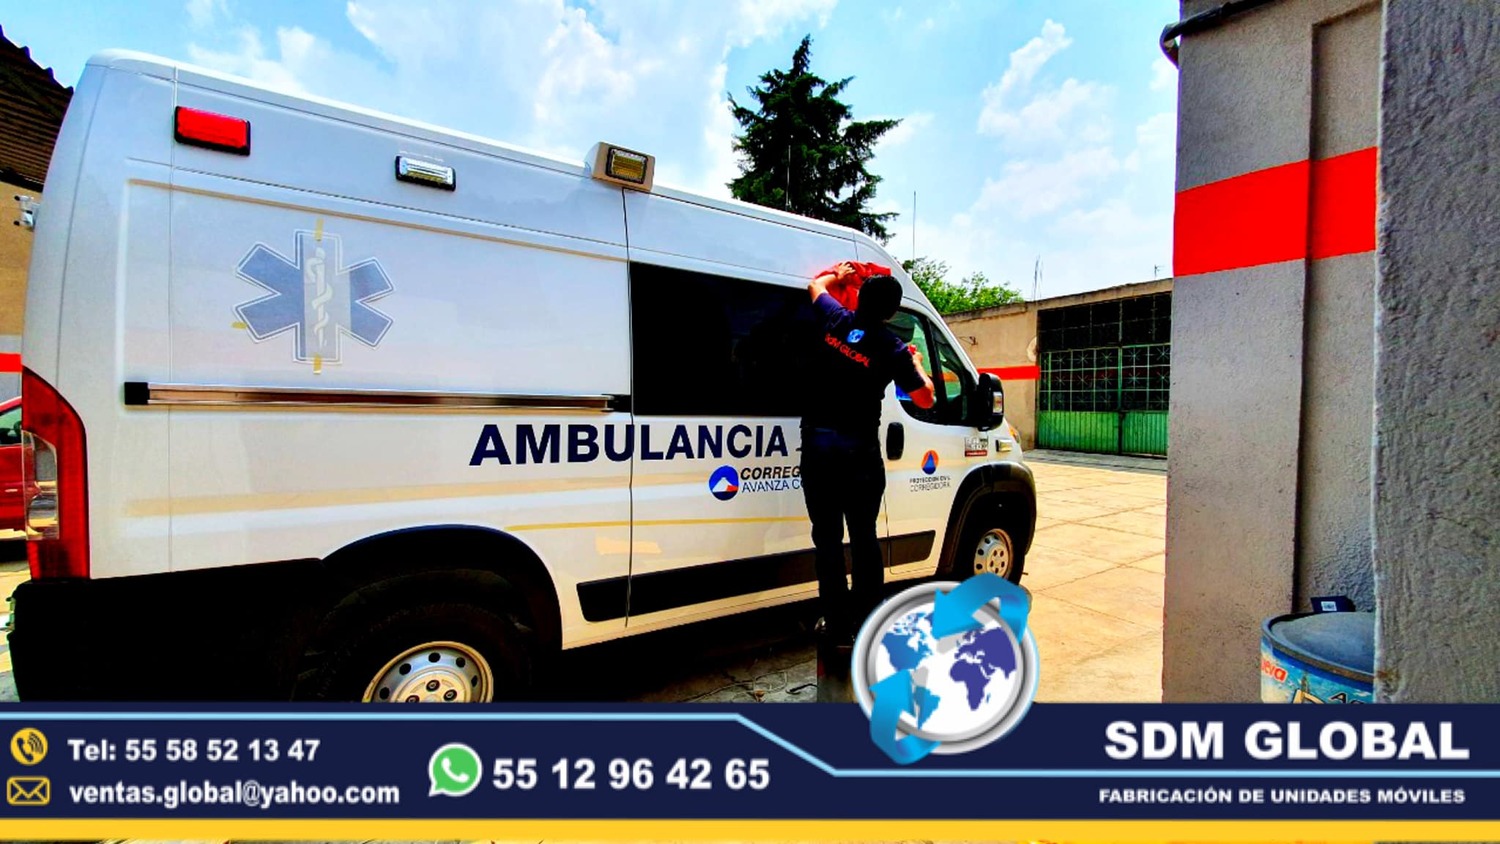 <span style="font-weight: bold;">Fabricacion de Ambulancias de traslado en SDM Global Mexico</span><br>